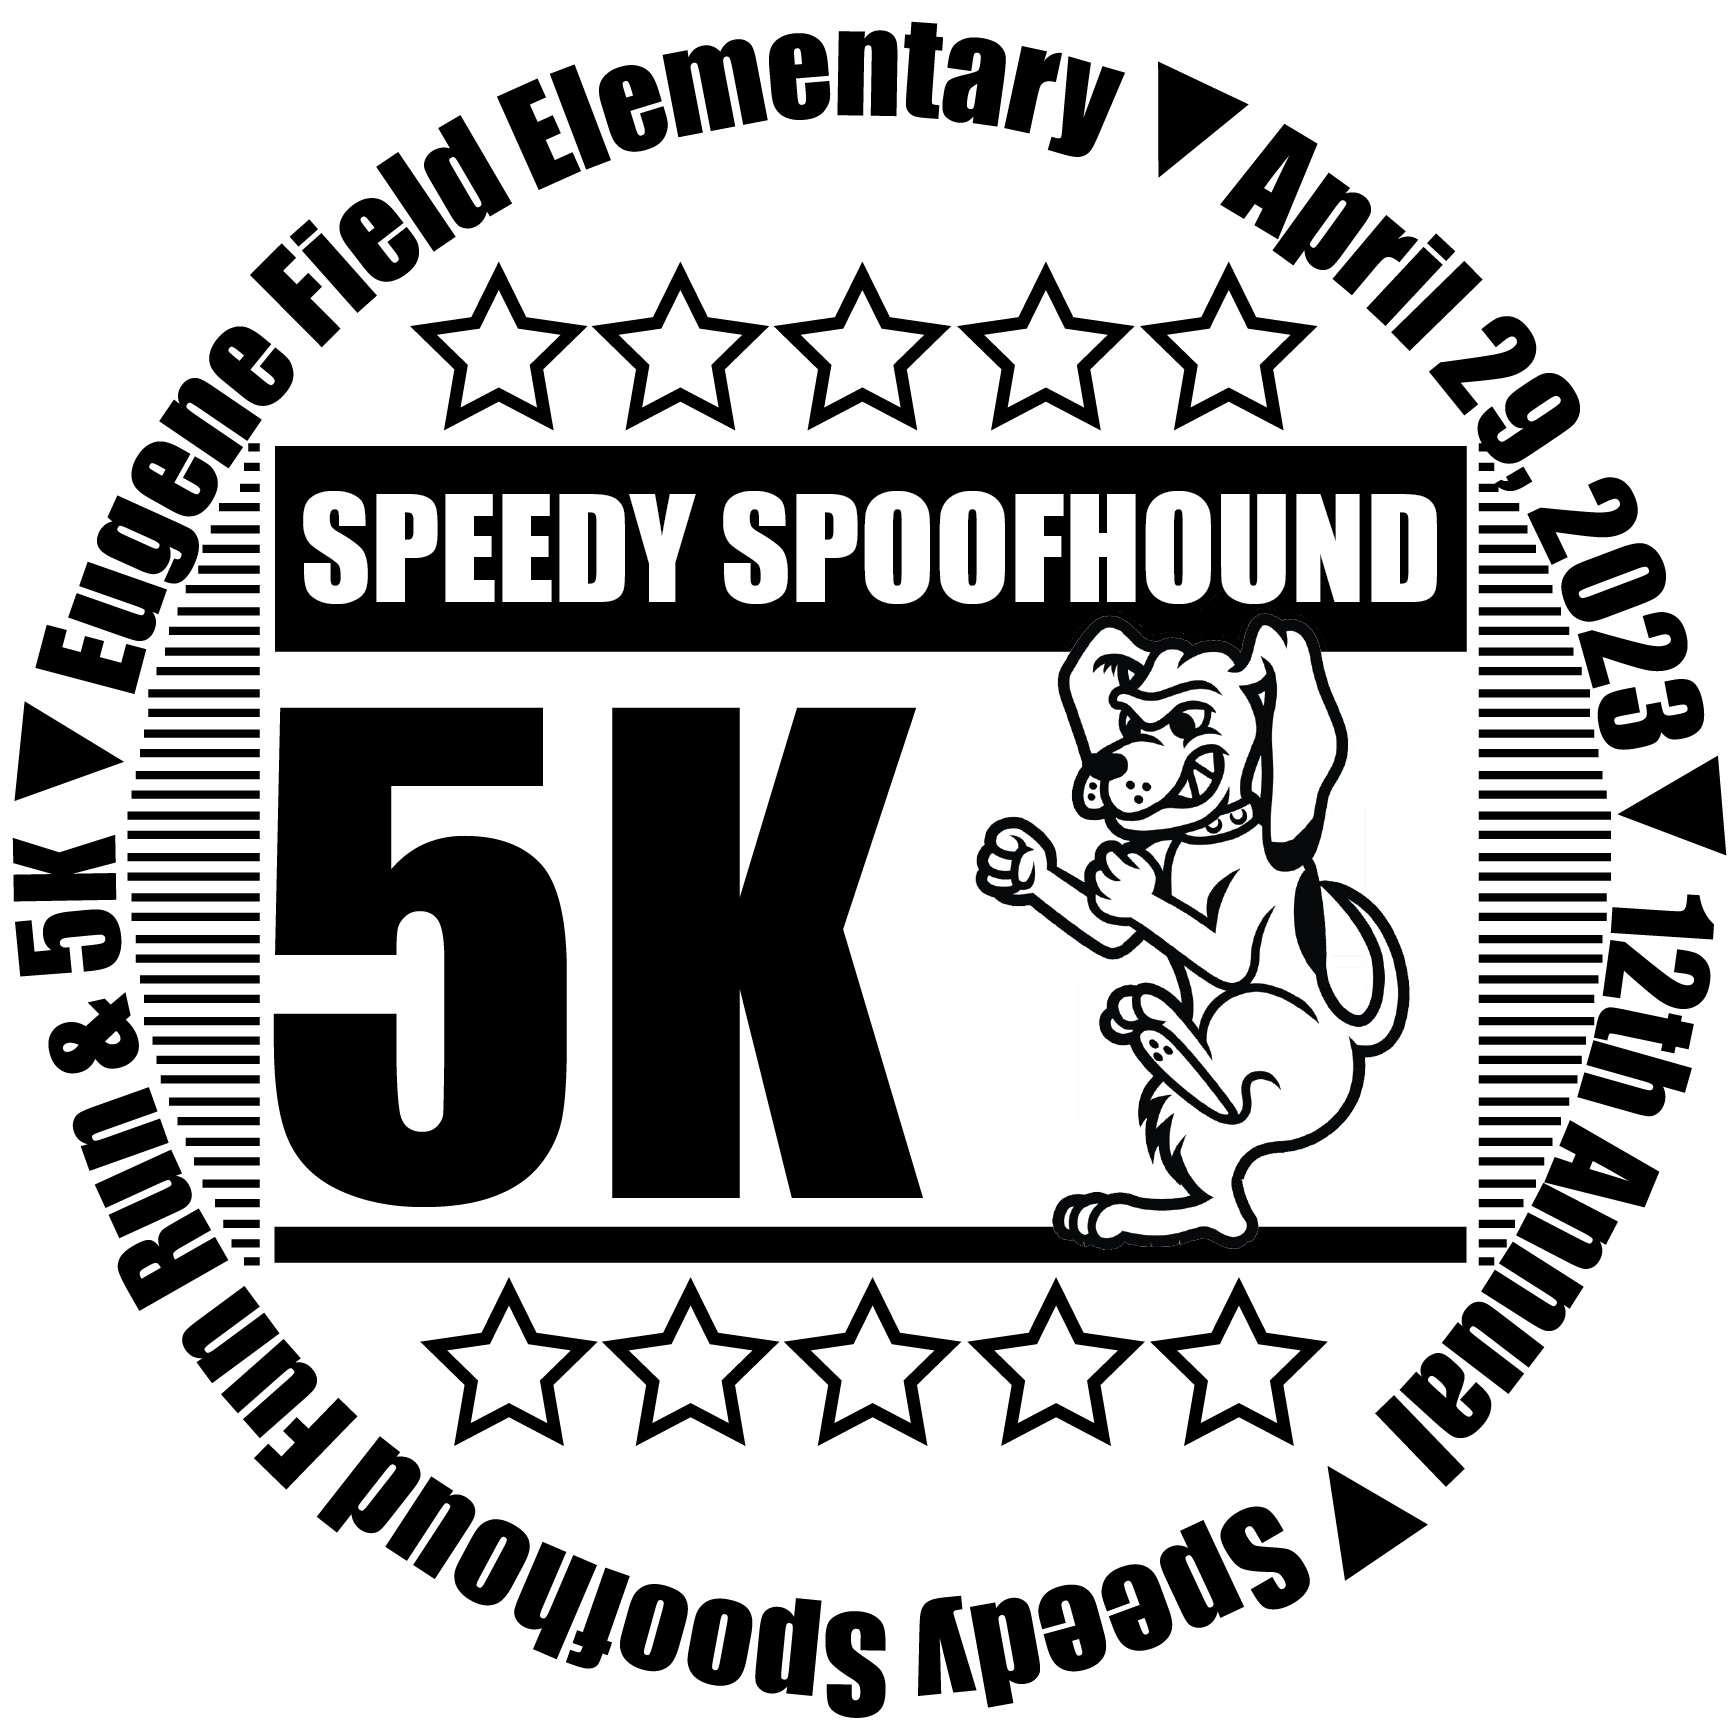 SpeedySpoofhound